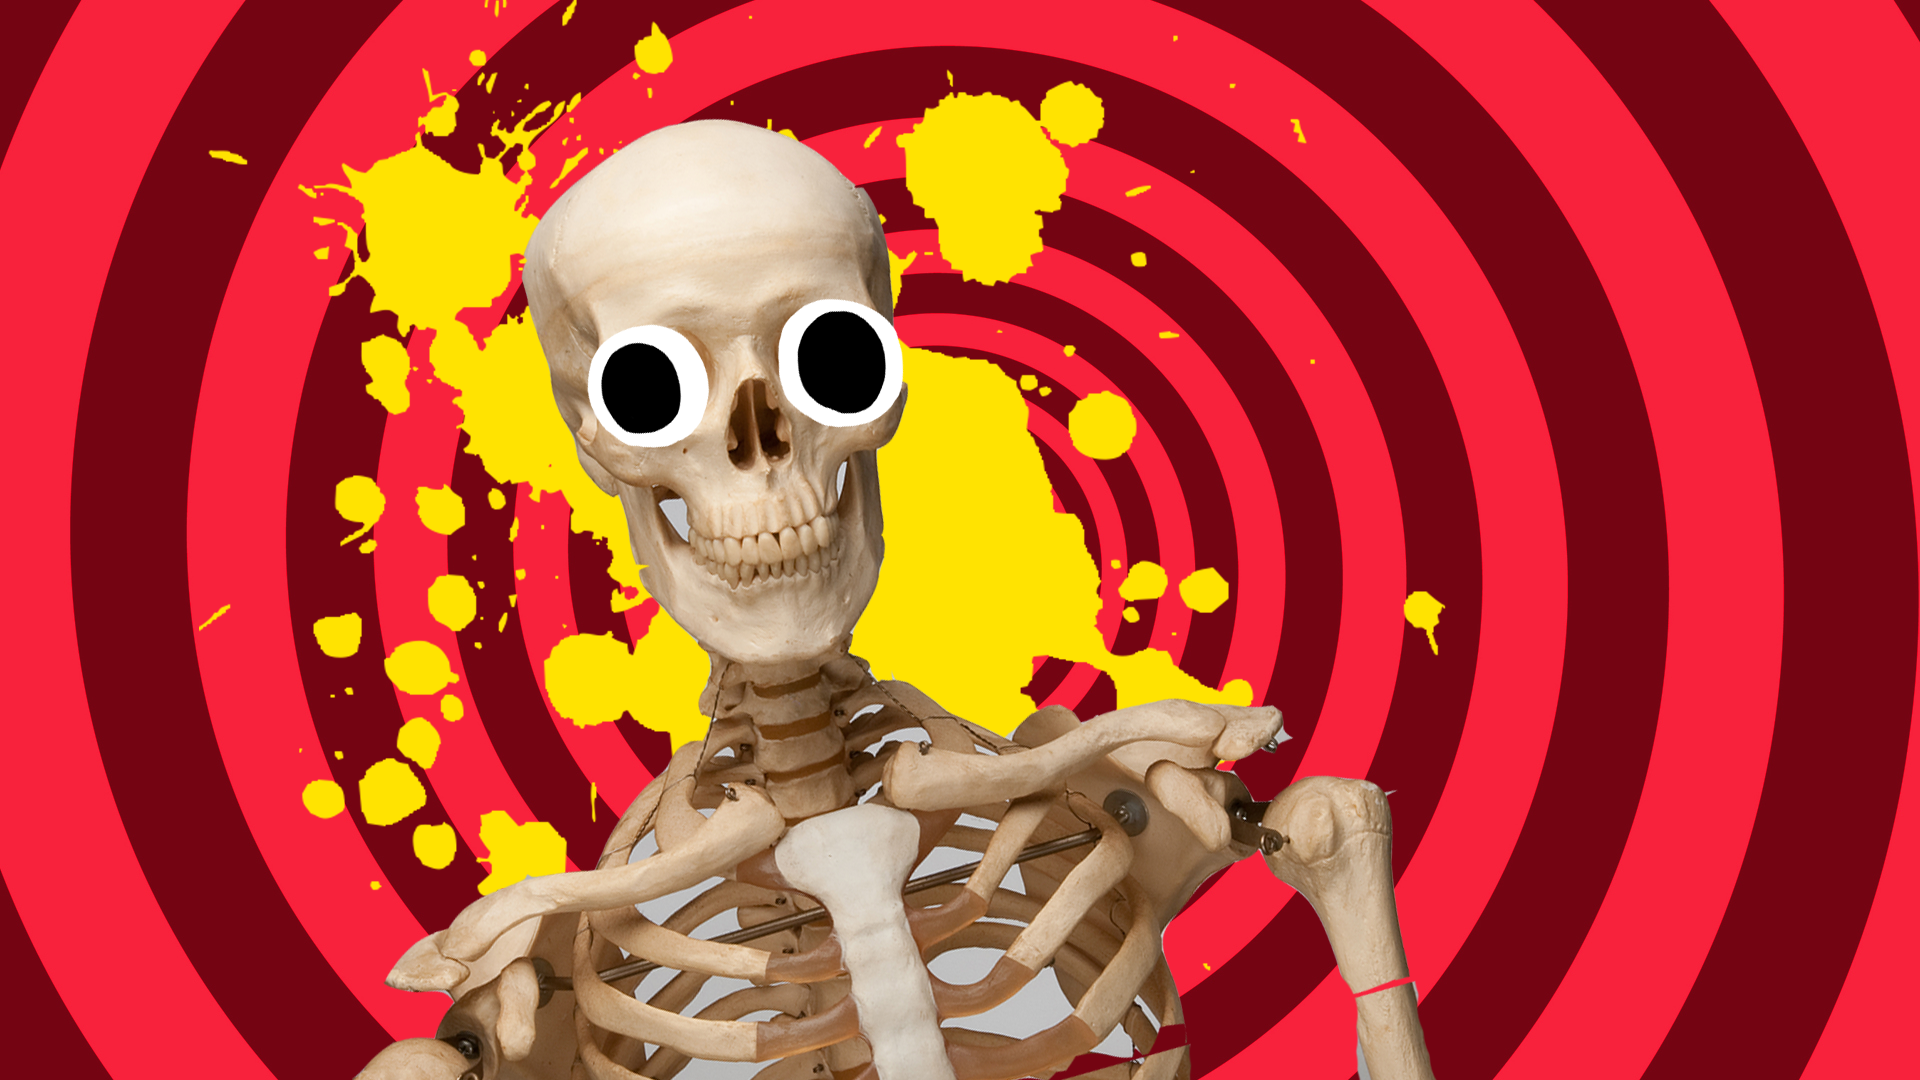 41 Best Skeleton Jokes Your Friends Will Find Humerus 